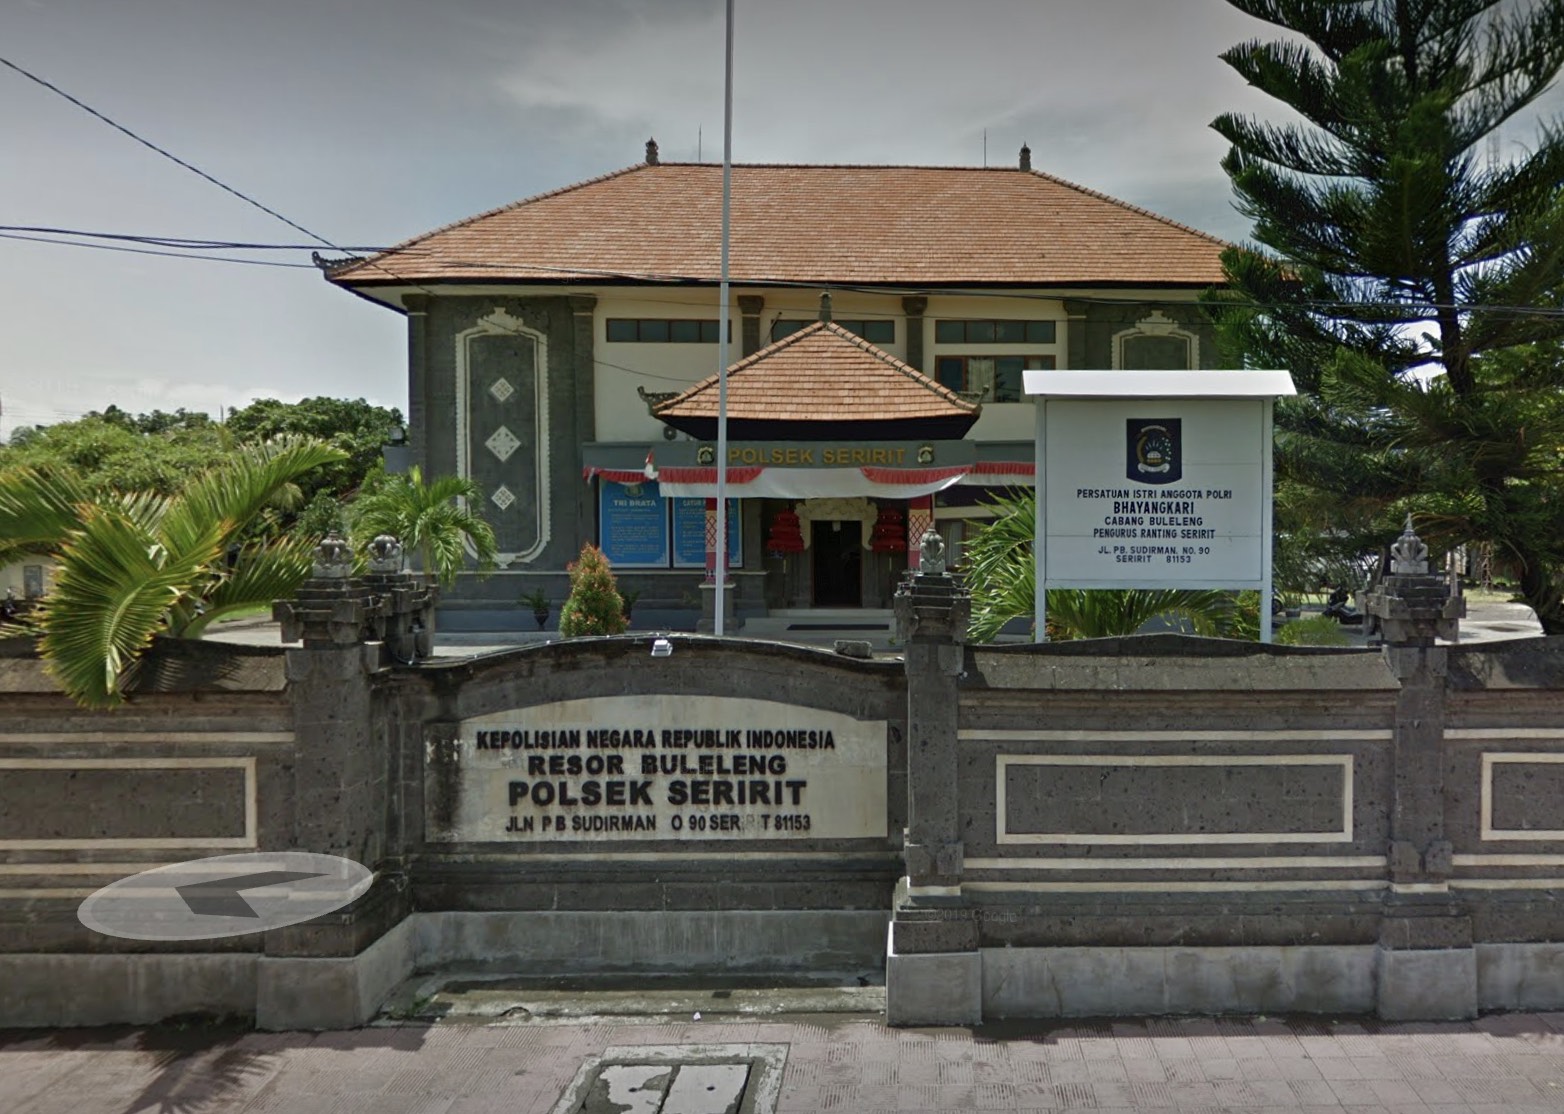 Seririt Police Station in Buleleng Regency. Photo via Google Maps